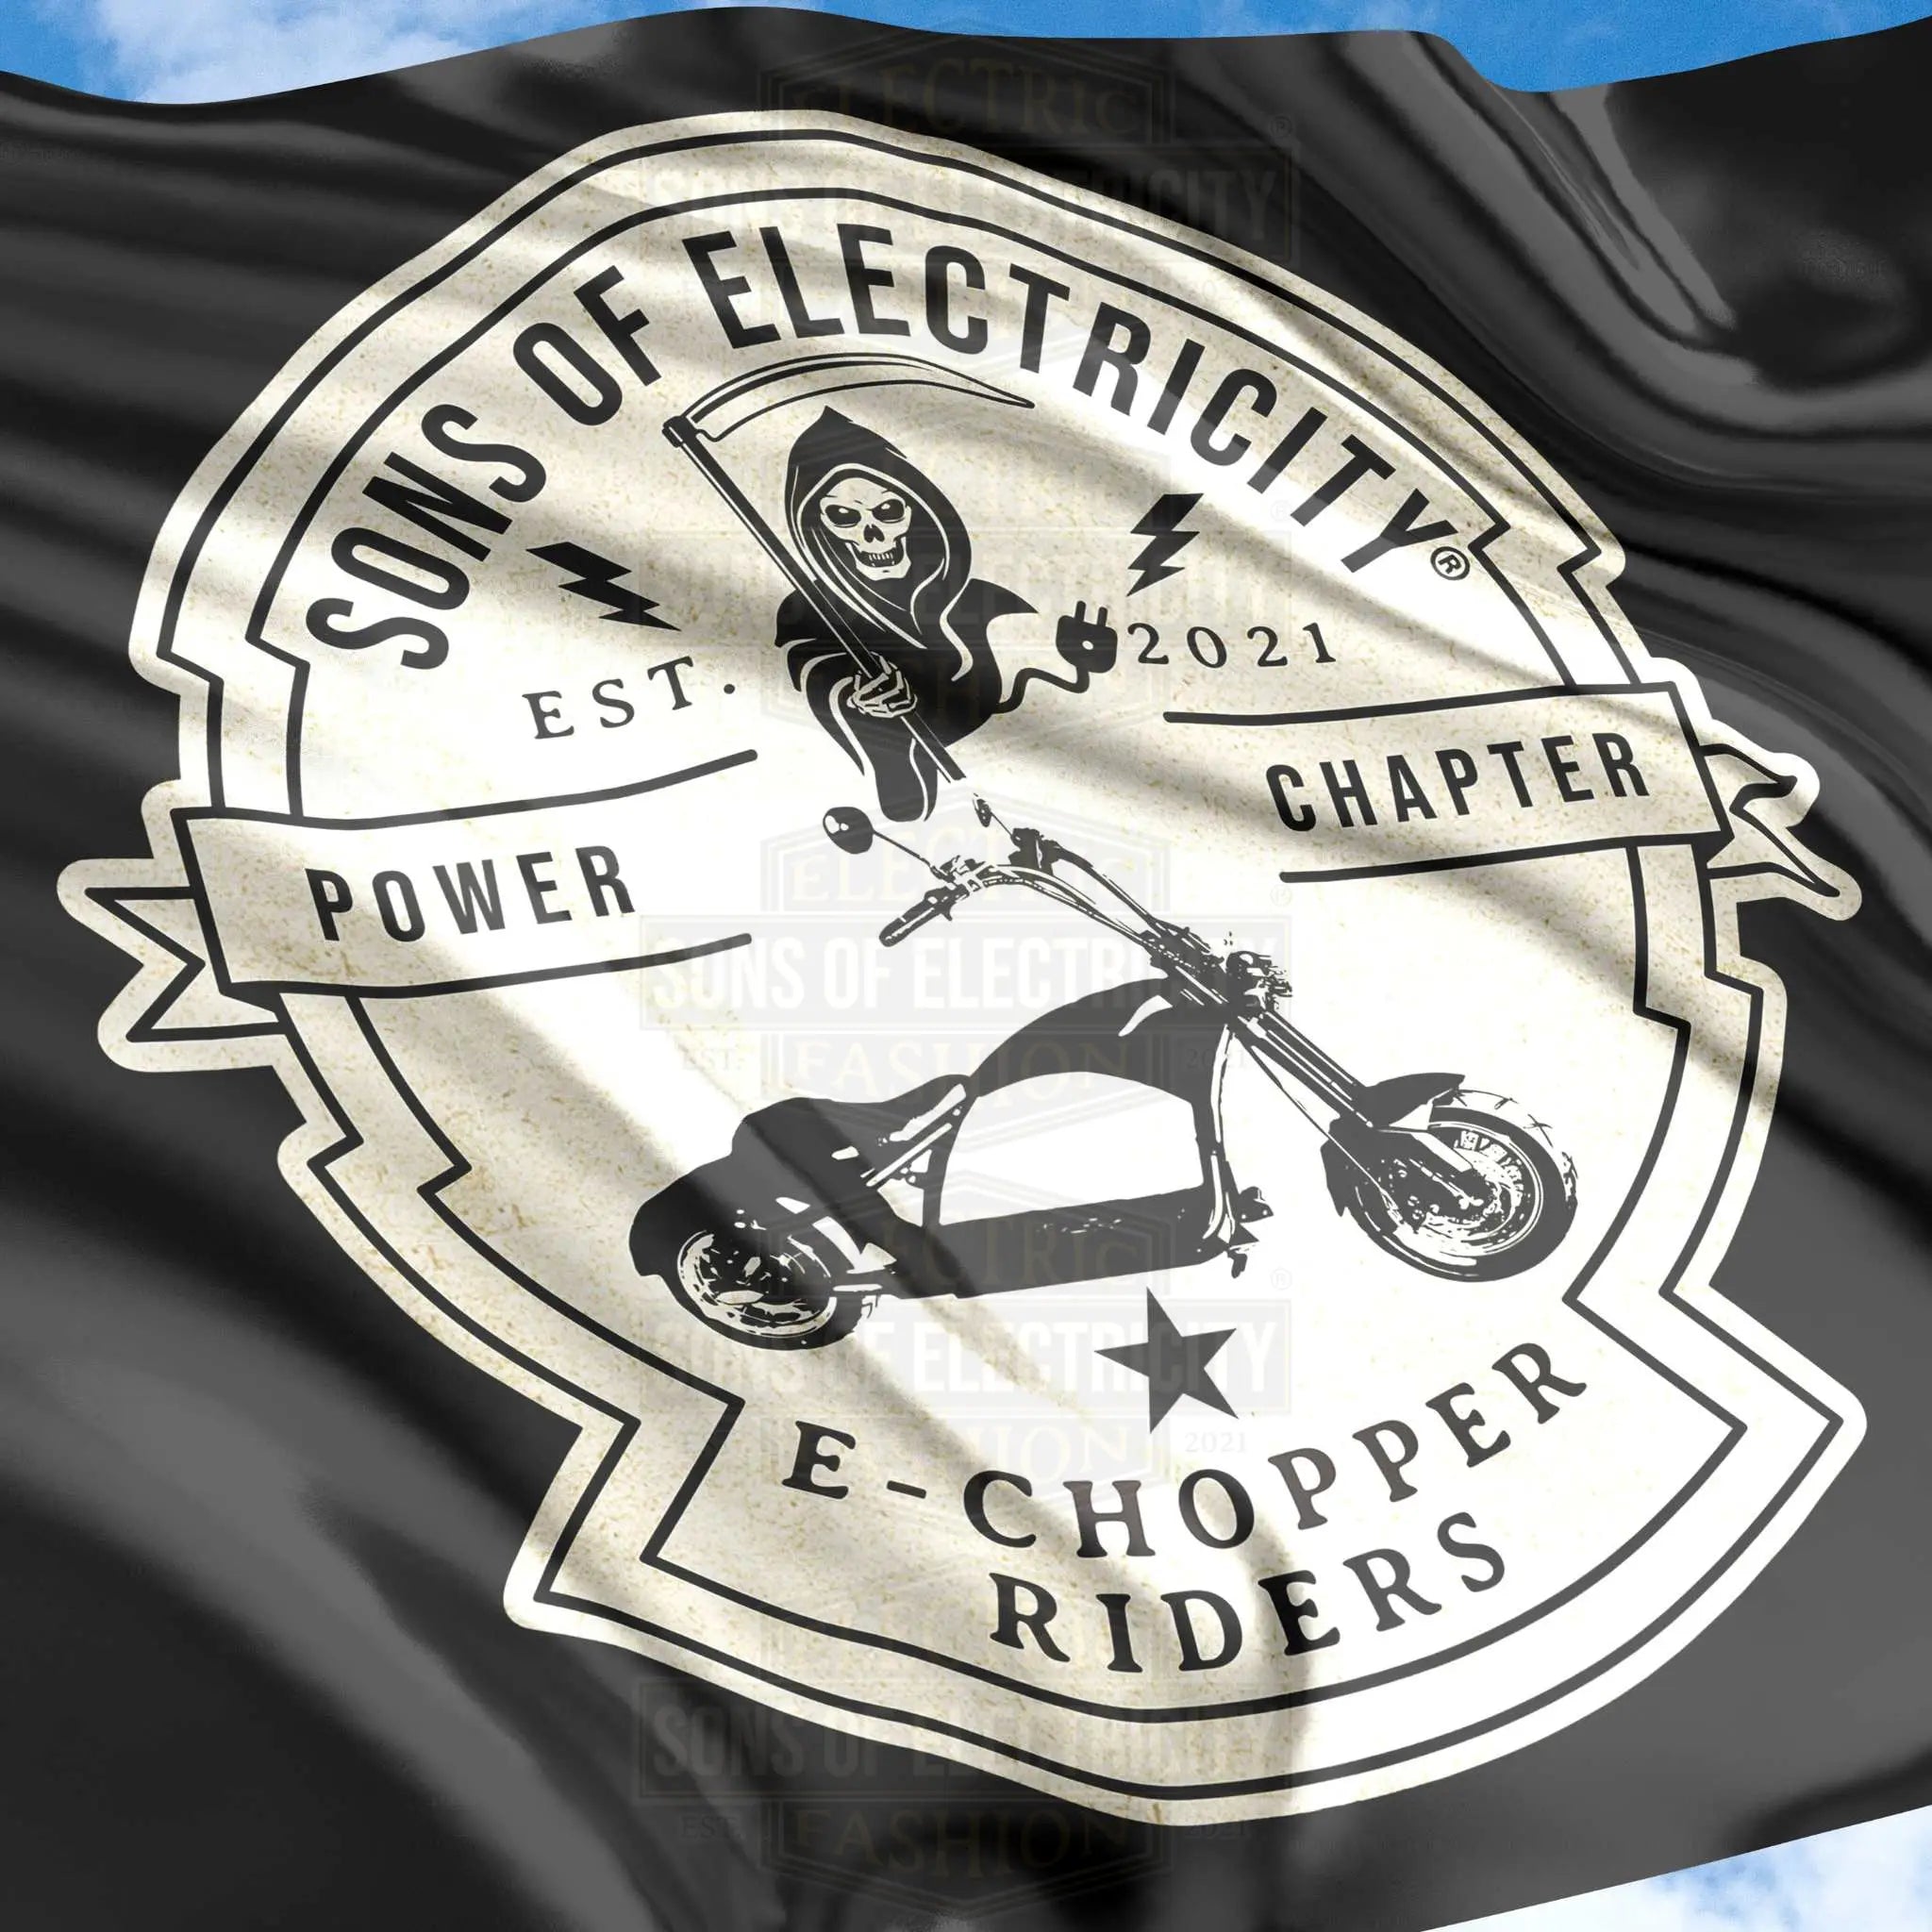 SONS OF ELECTRICITY Hiss-Fahne - E-Chopper Riders (E-Chopper